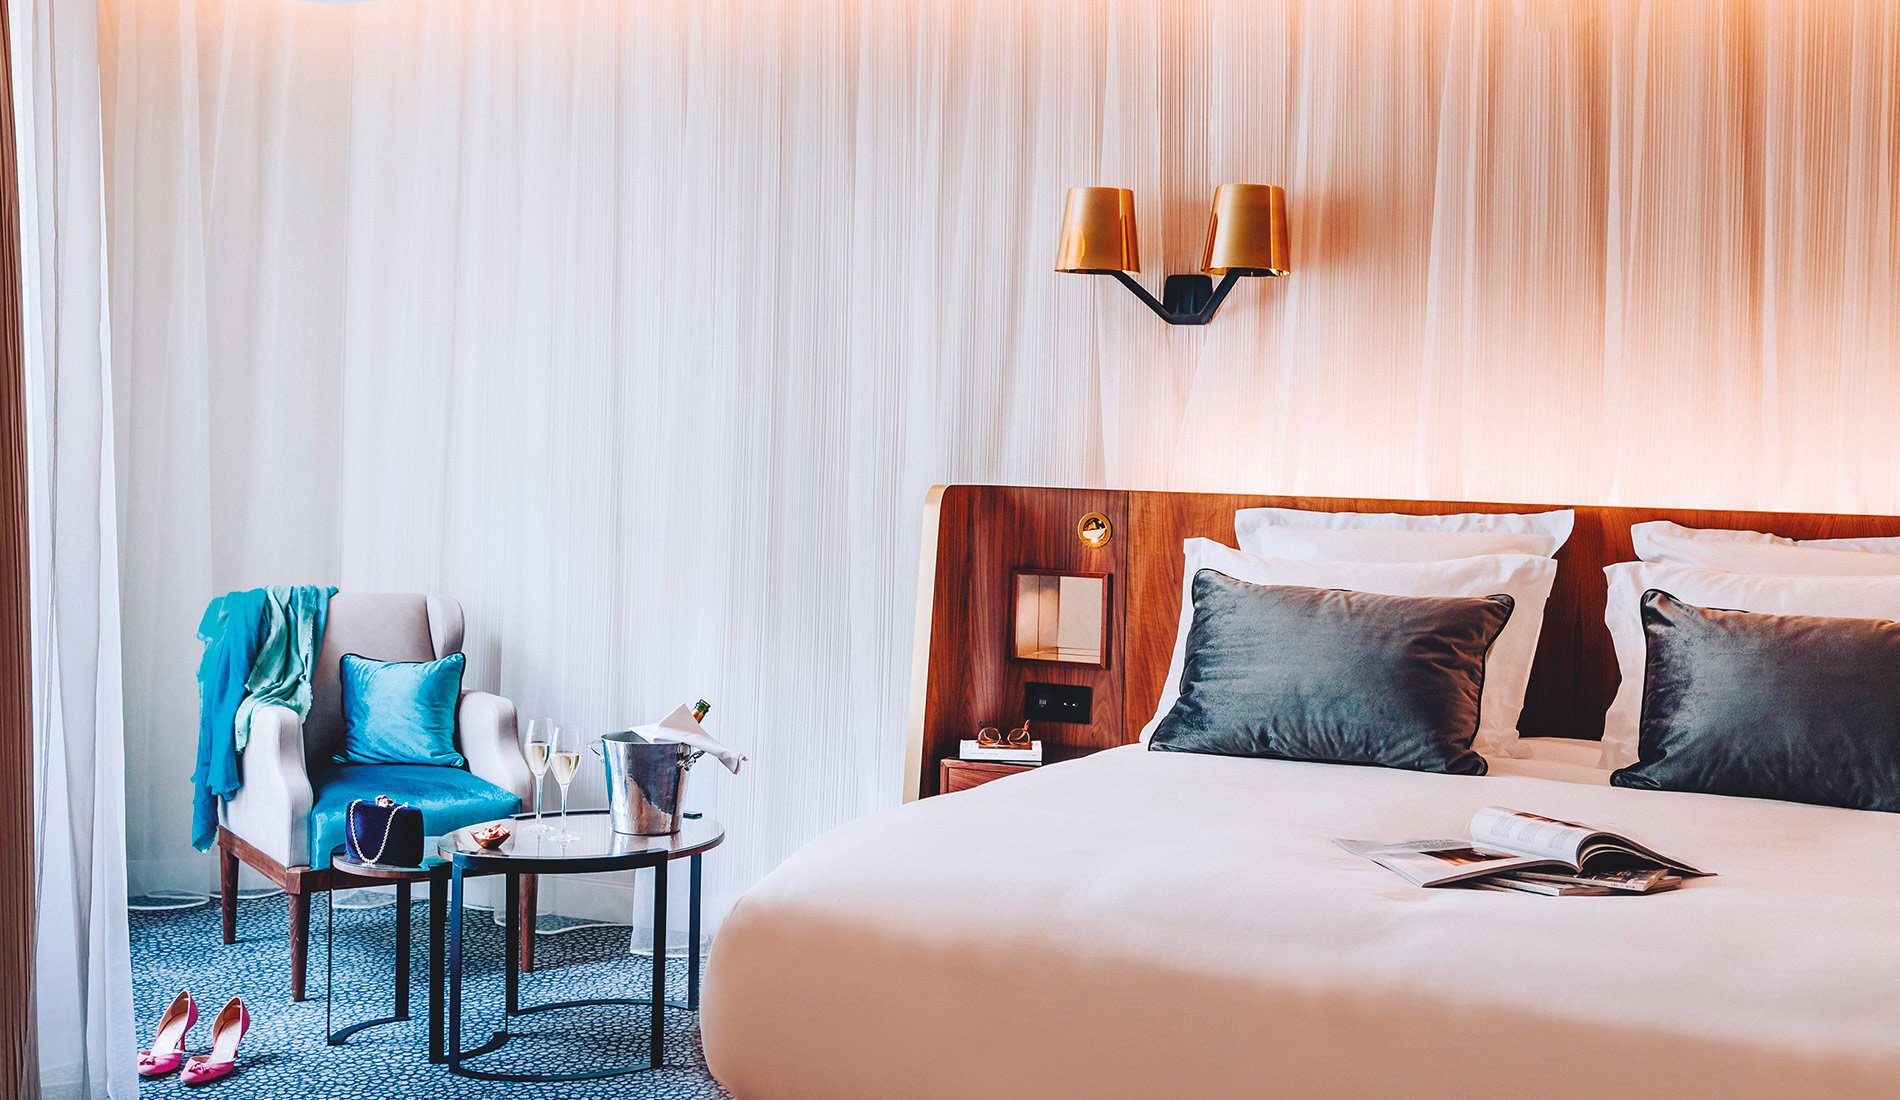 Luxury hotel - Maison Albar Hotels Le Pont-Neuf - 5-star - modern room